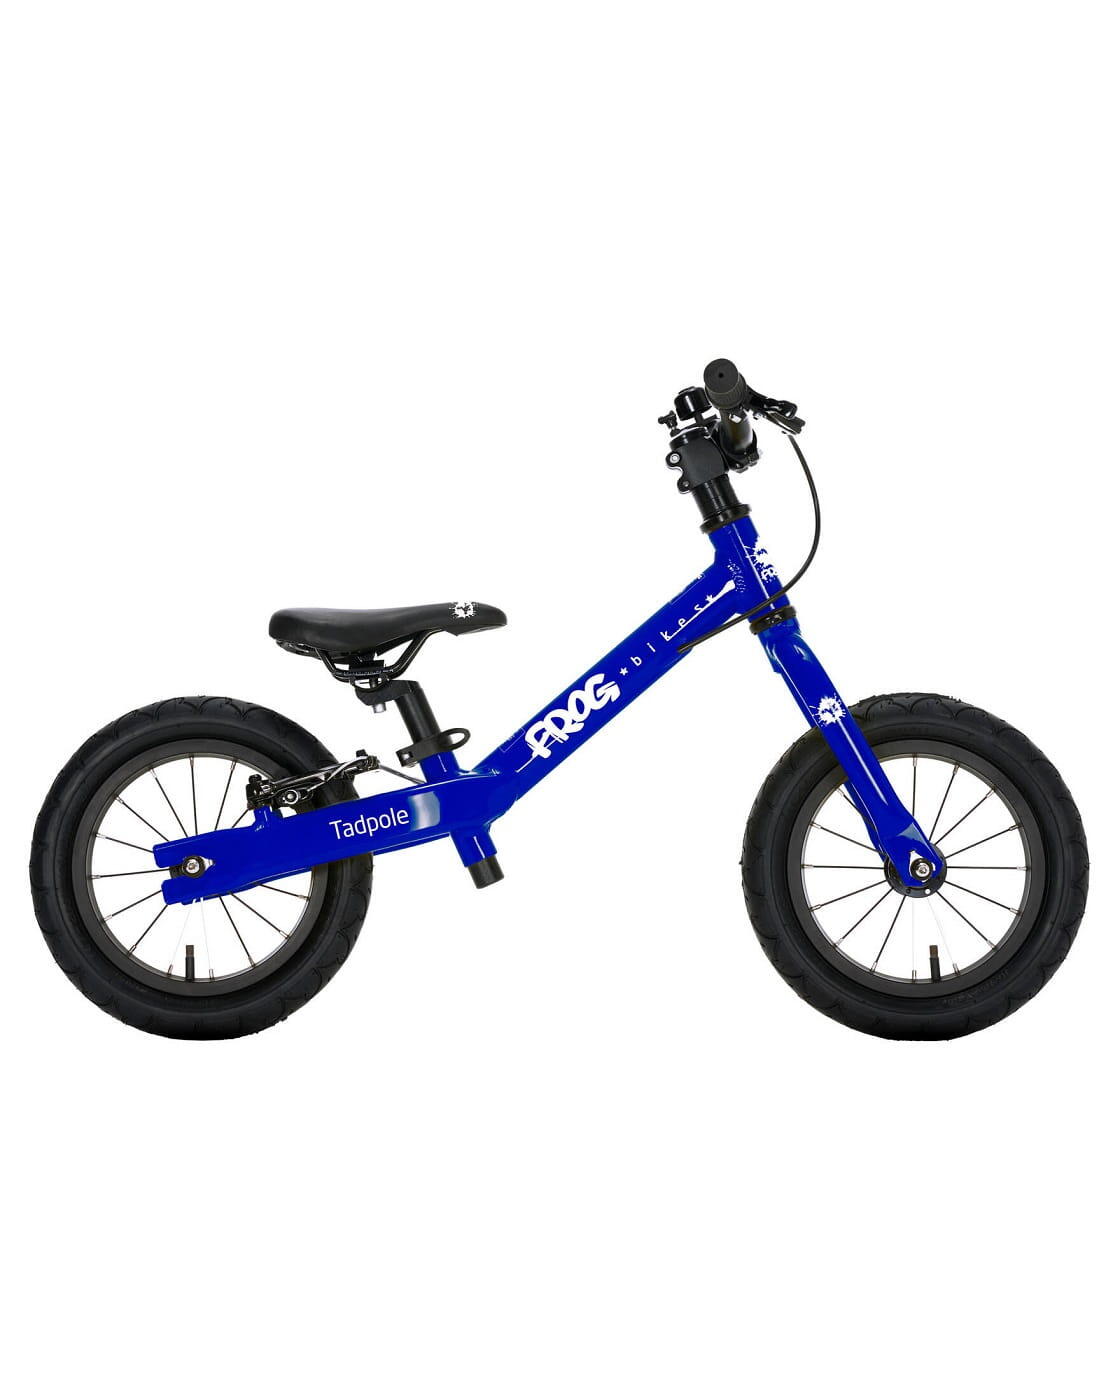 Tadpole 12 Inch Lightweight Kids Balance Bike For 2-3 Years - Electric Blue 1/6